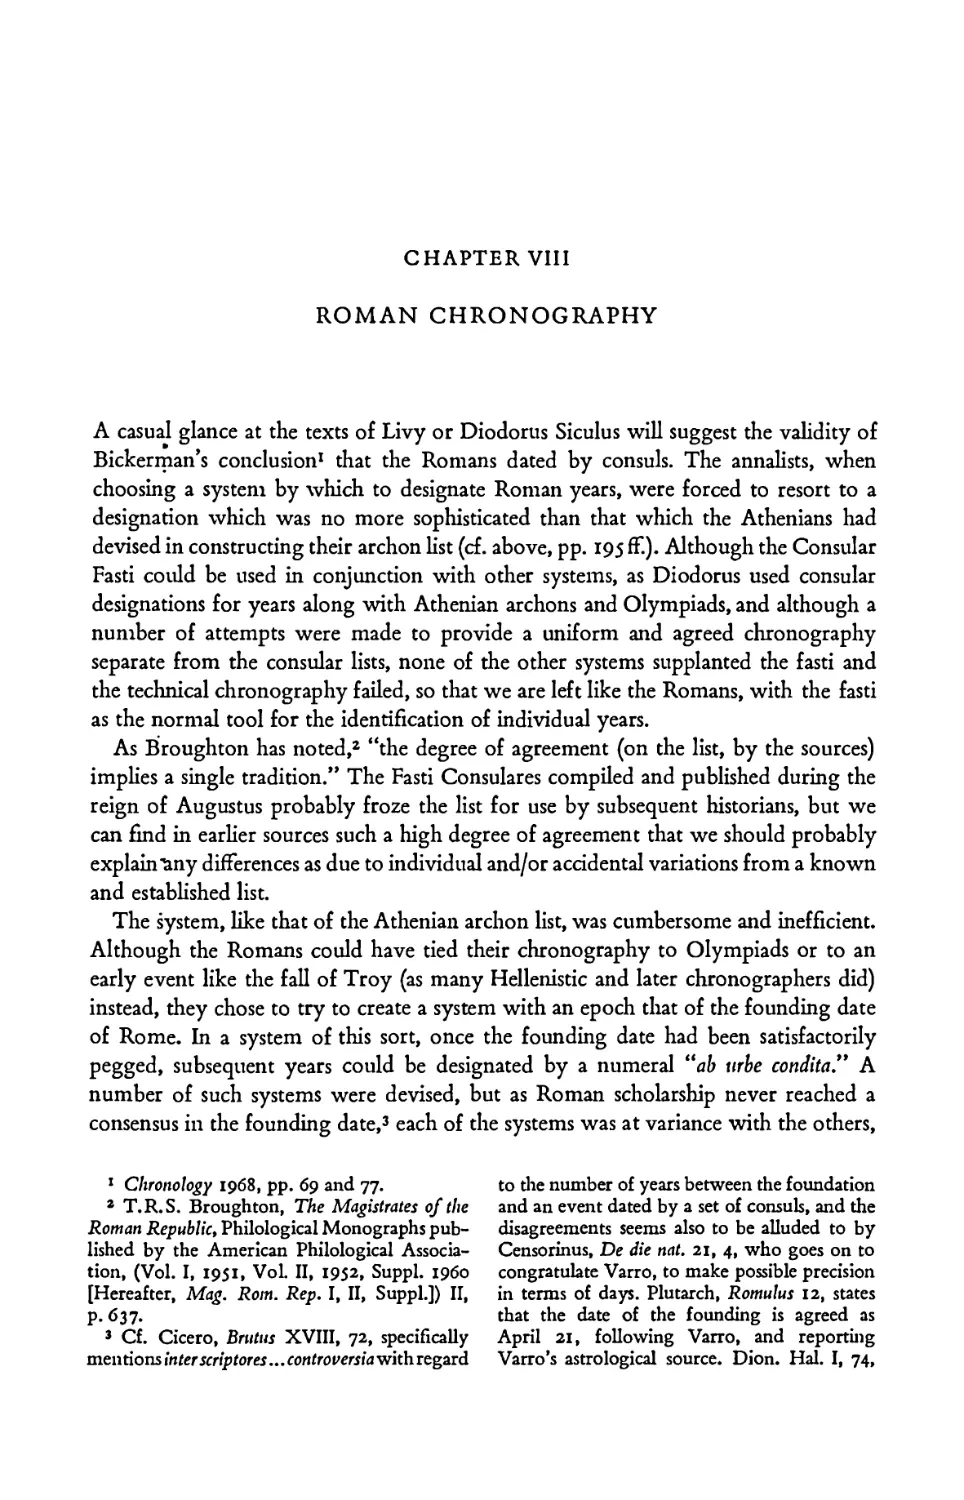 CHAPTER VIII. ROMAN CHRONOGRAPHY